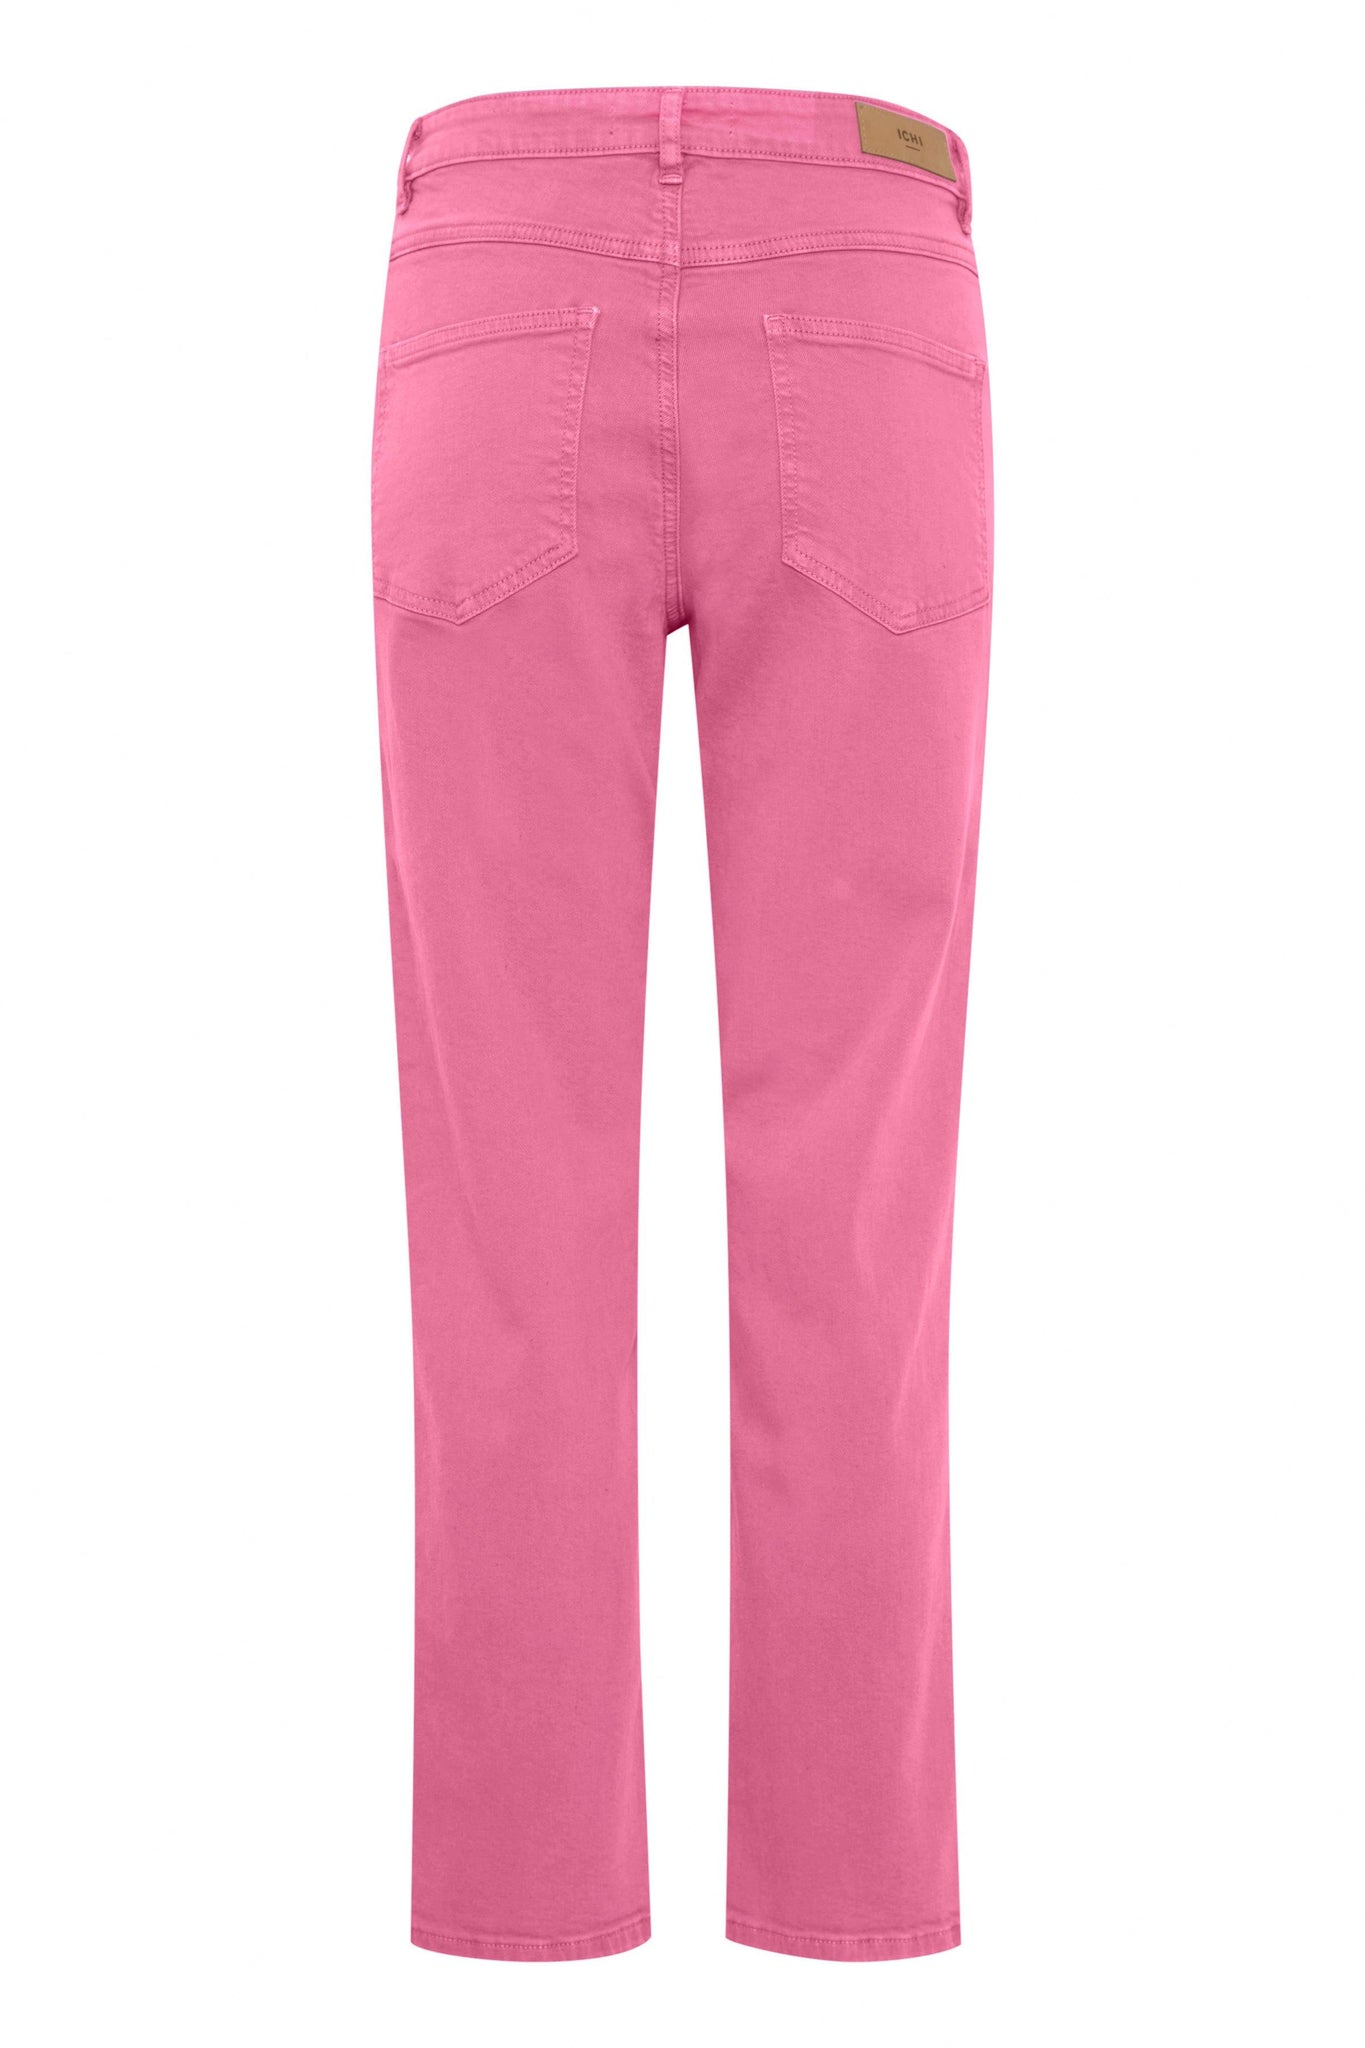 Pantalones ICHI Cenny Raven Super Pink - ECRU